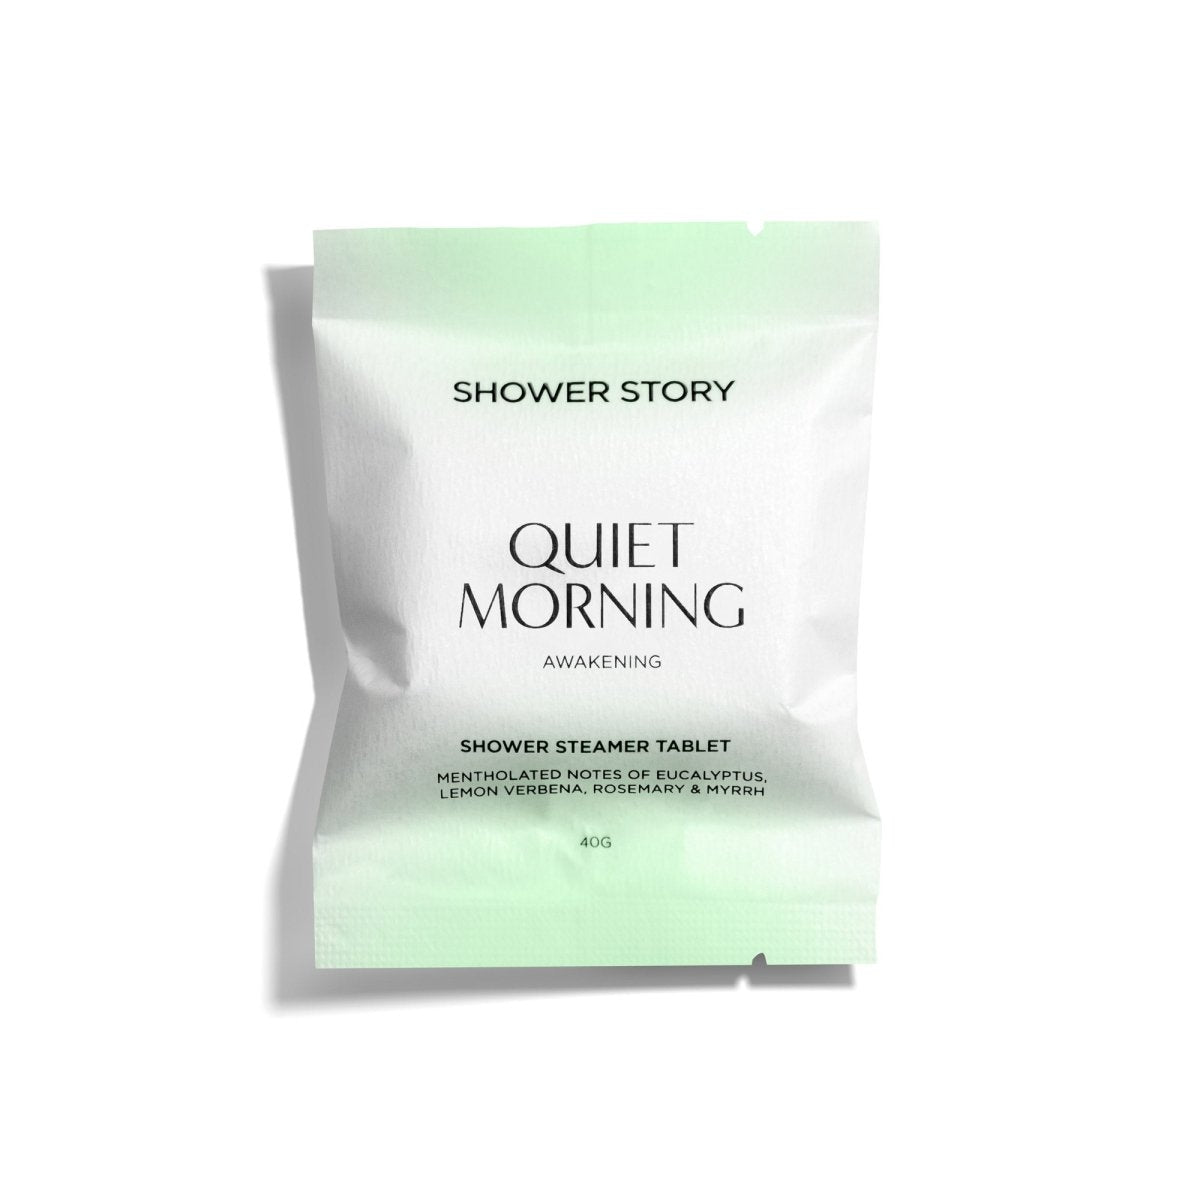 SHOWER STORY_[NEW] QUIET MORNING – Awakening | Mentholated Shower Steamer Set (10 Tablets)_Shower Steamer Daily Set_SSQMDX10